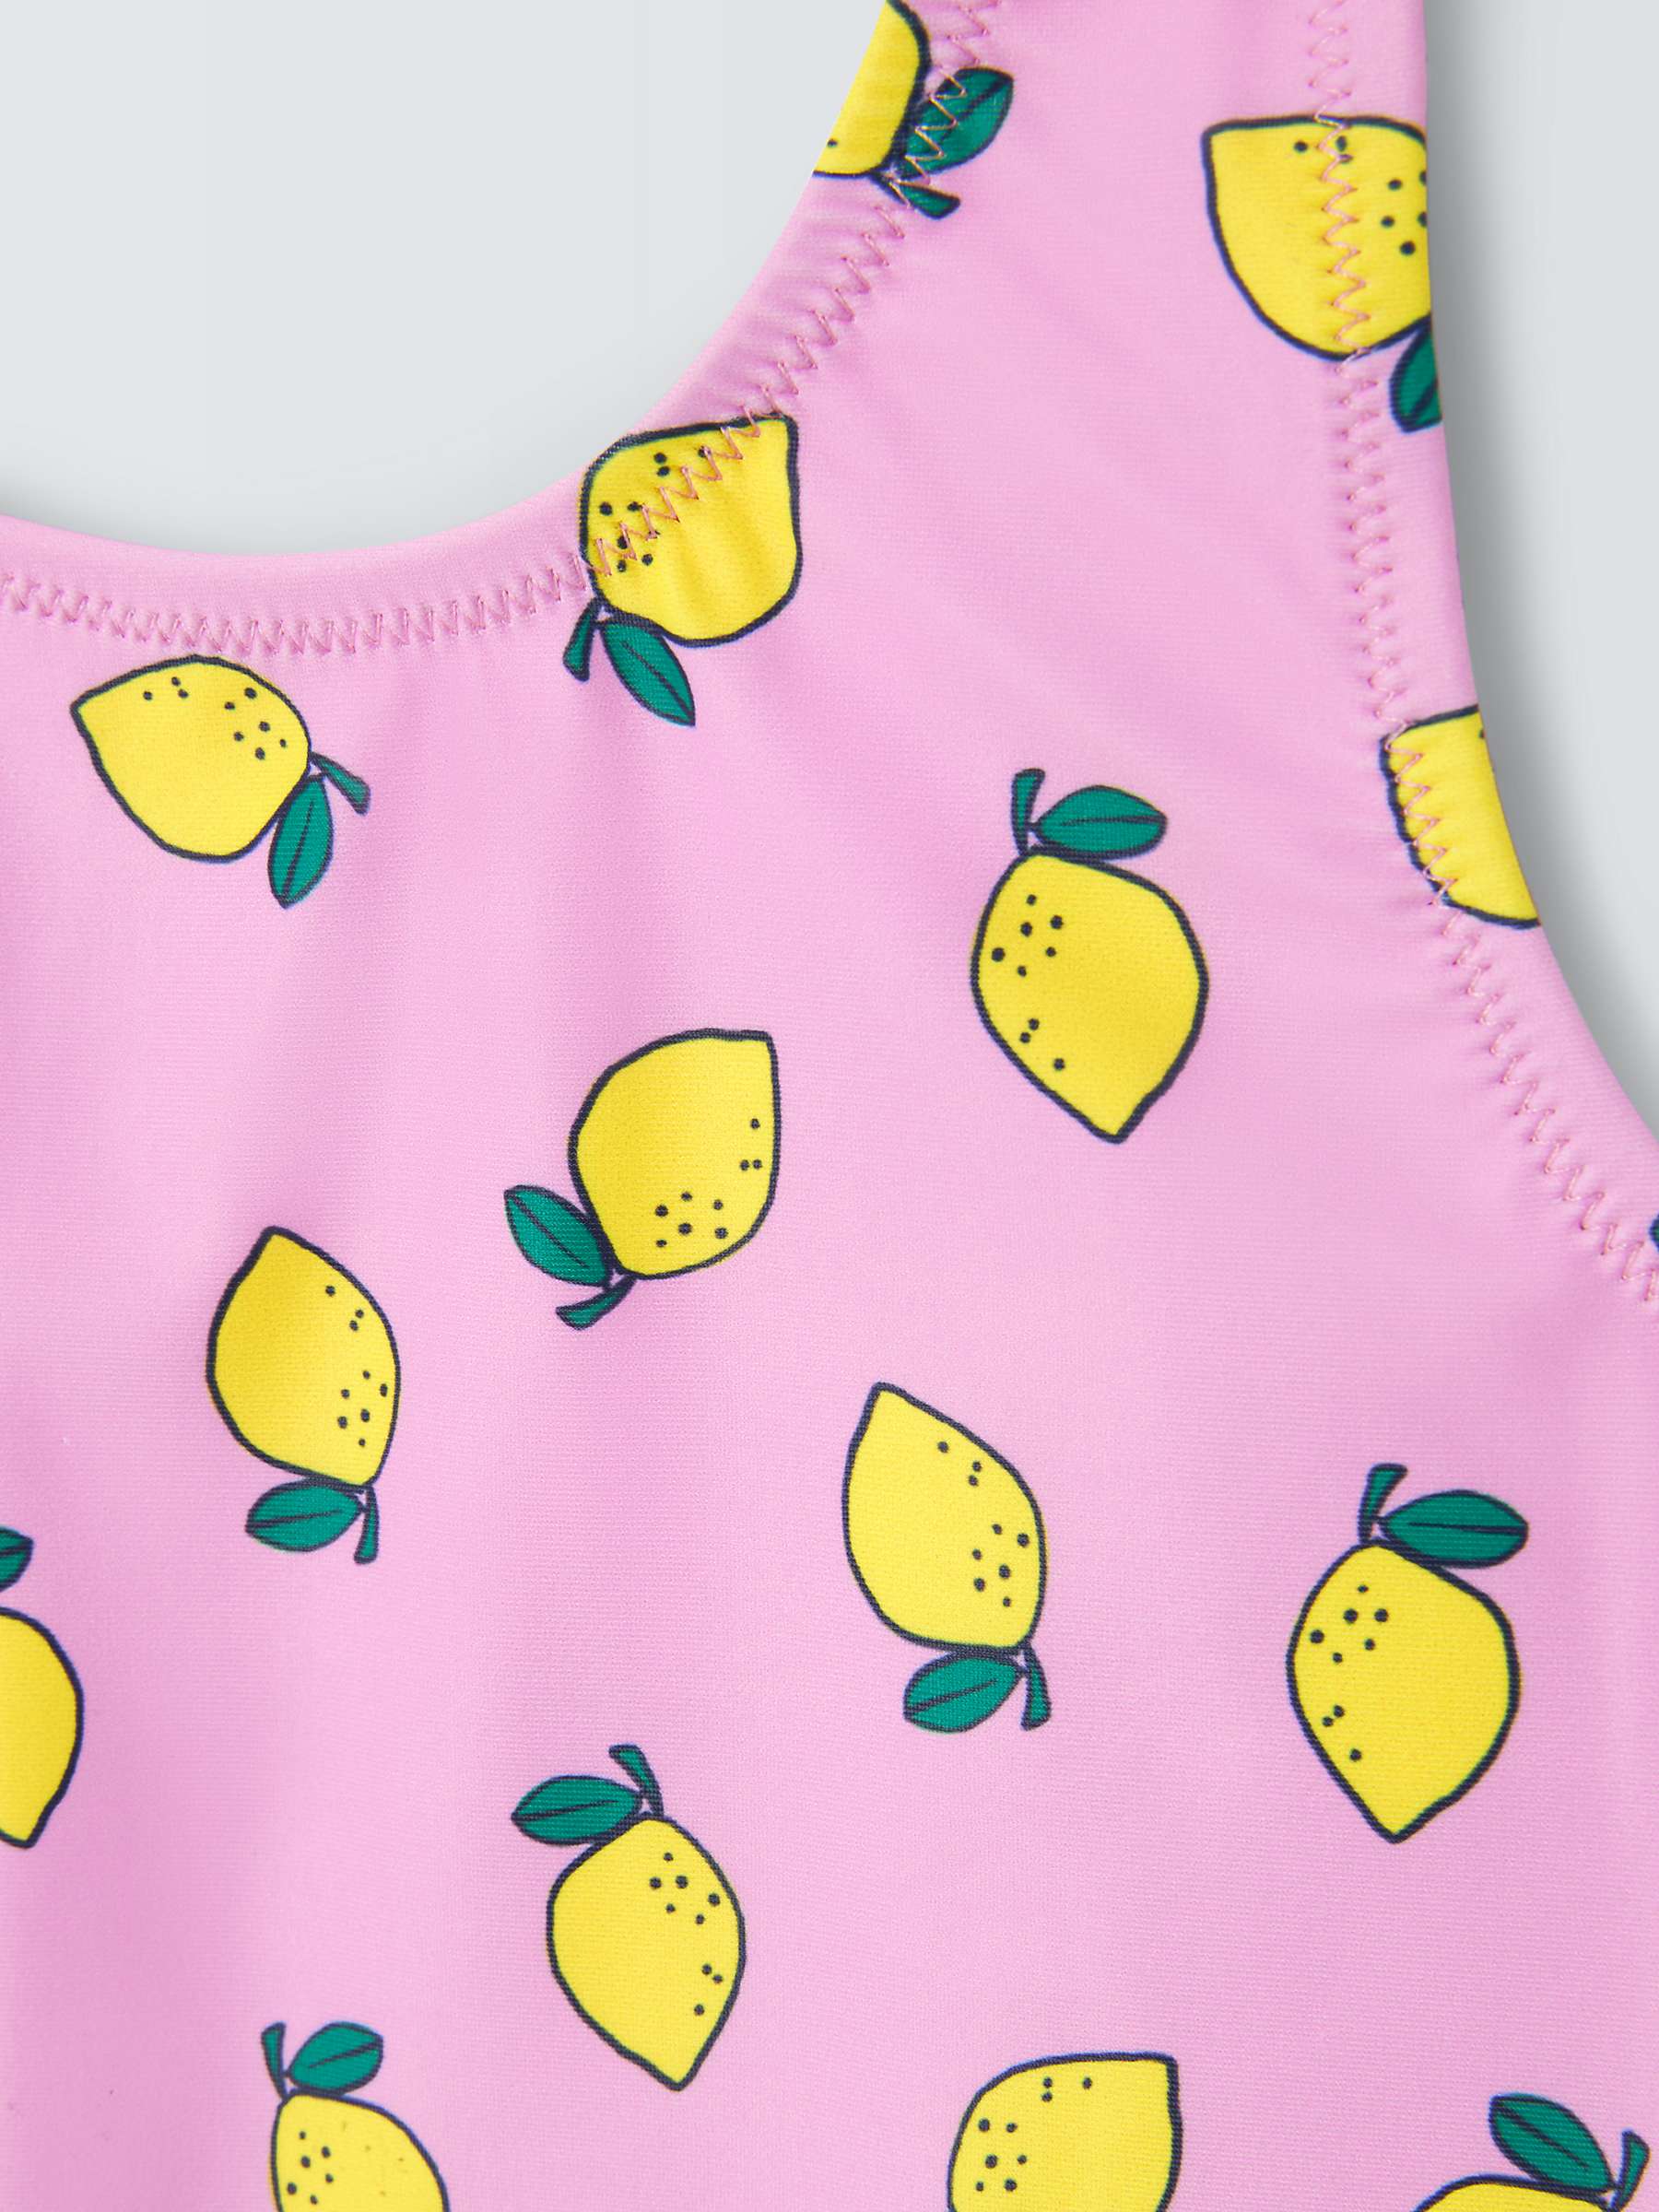 Buy John Lewis ANYDAY Kids' Lemon Print Swimsuit, Pink/Multi Online at johnlewis.com